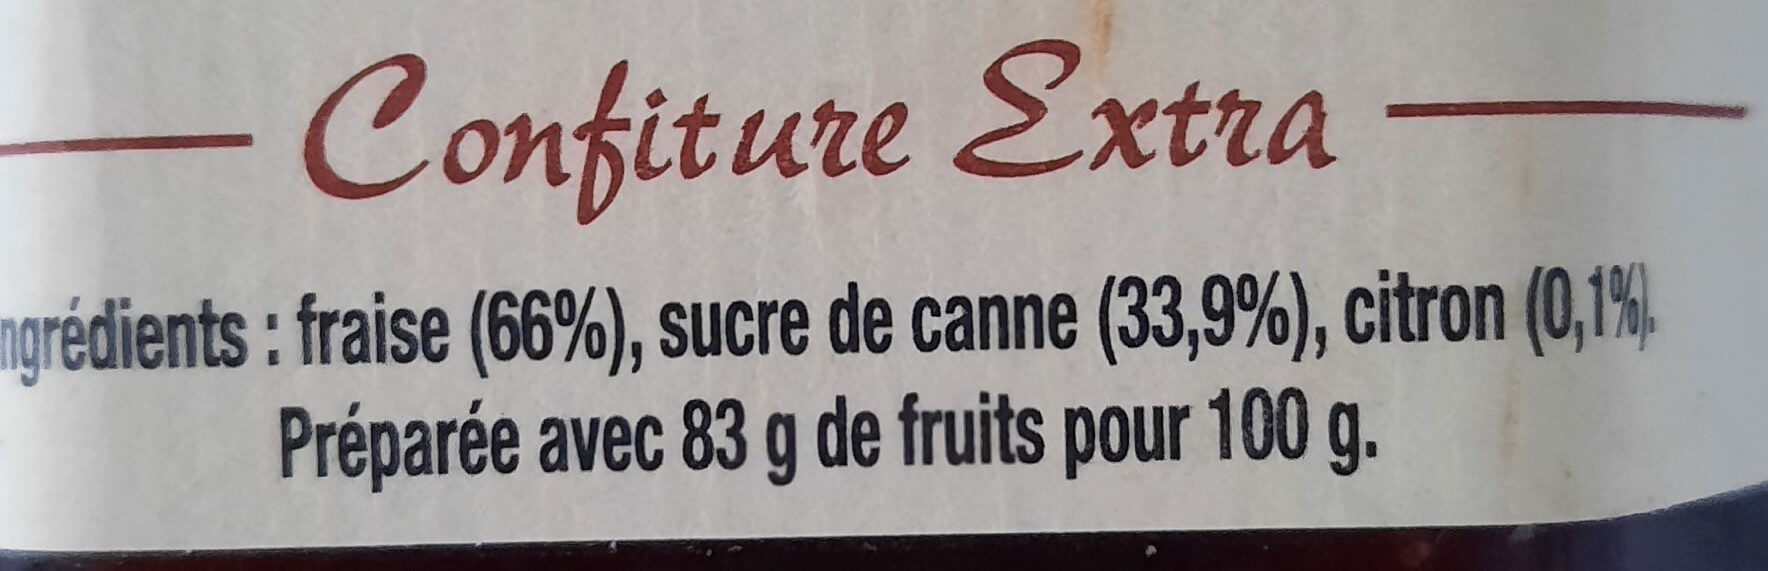 Fraise Confiture Extra - Ingrediënten - fr